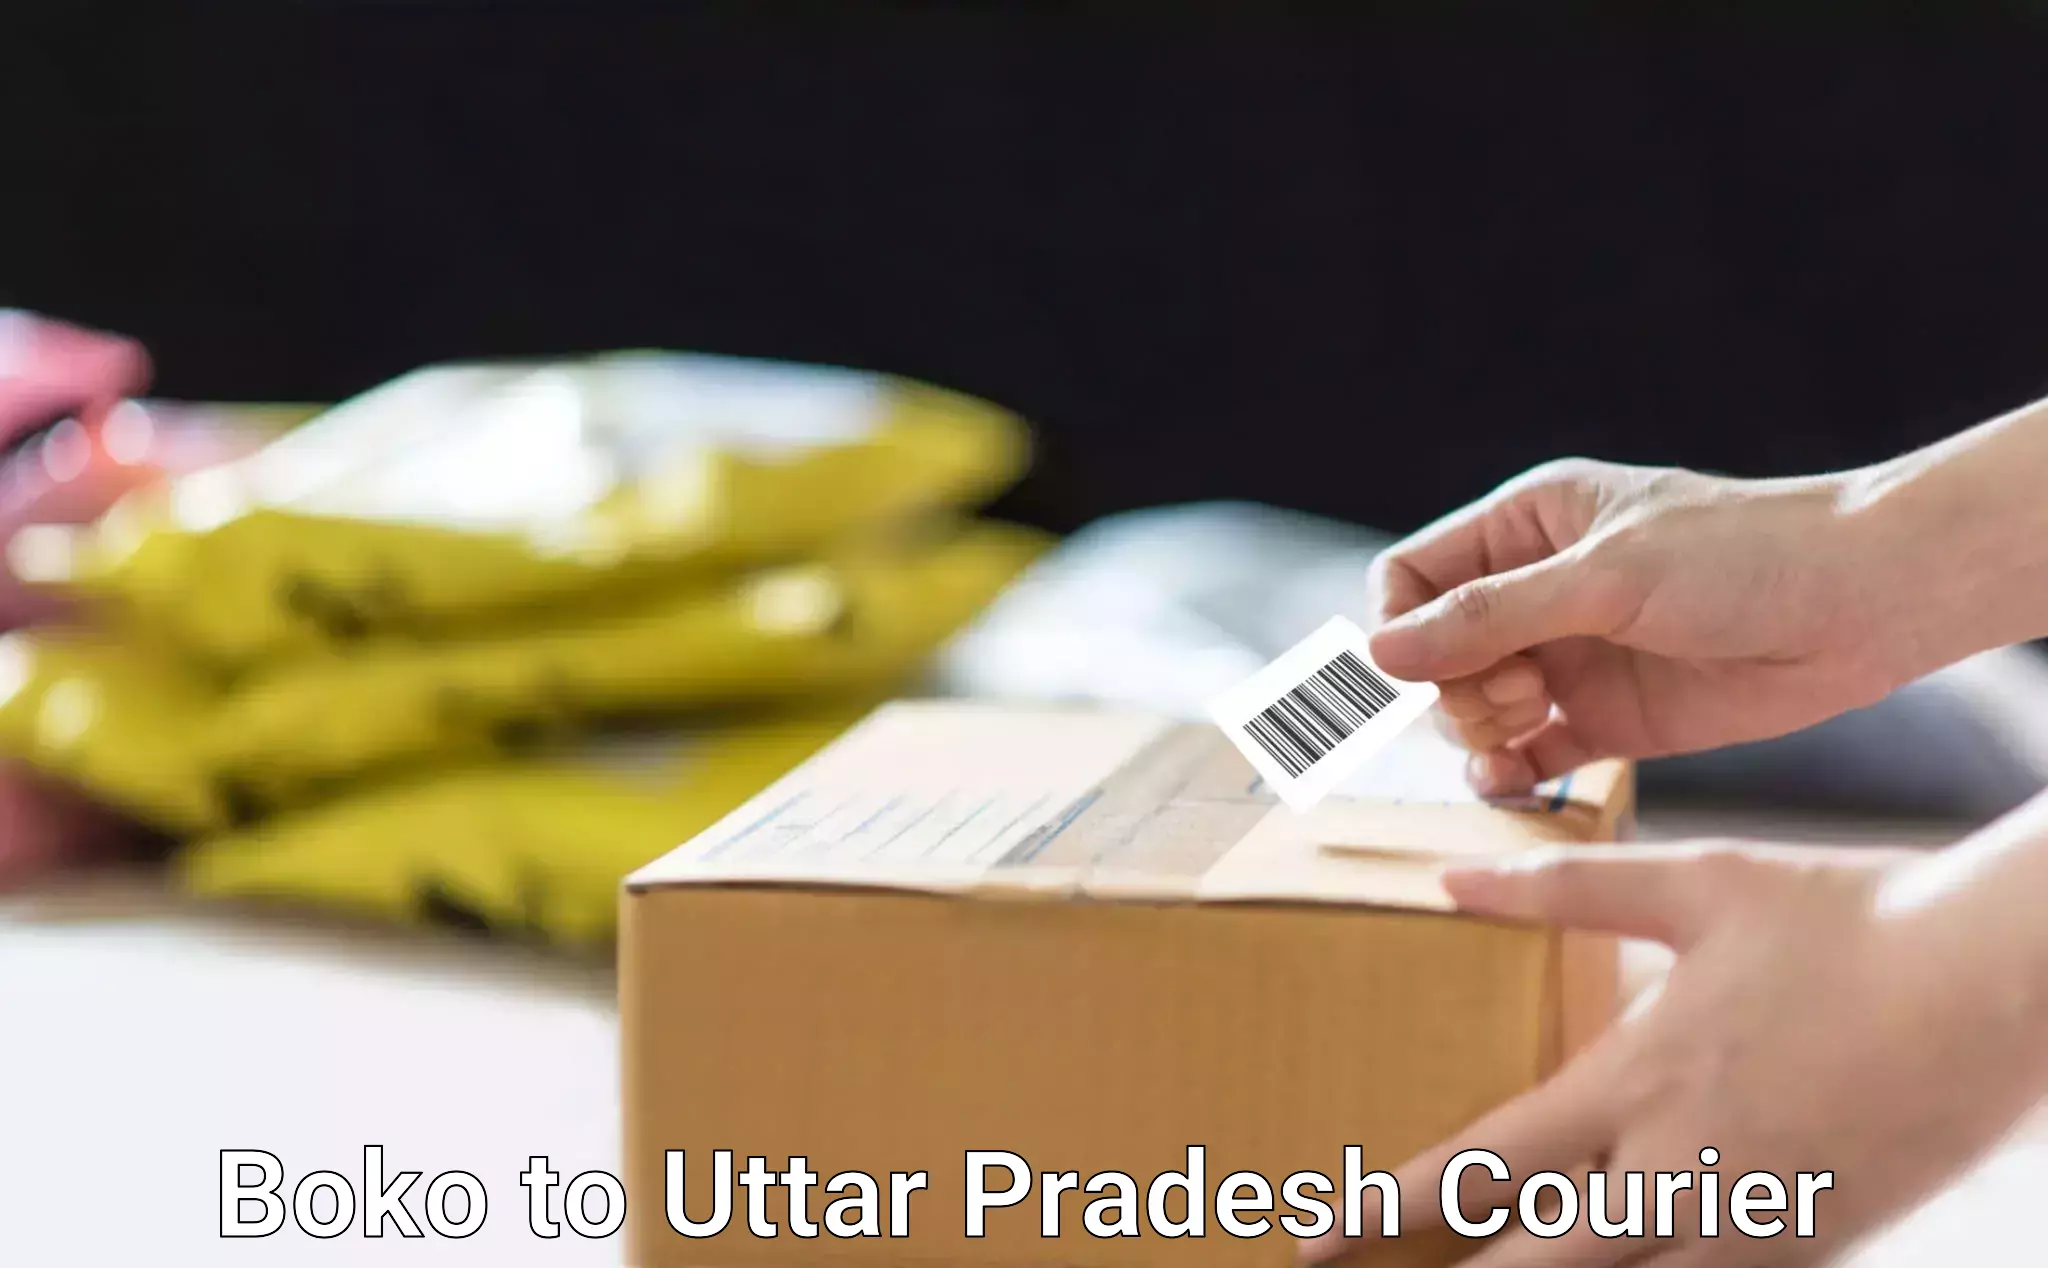 Customizable delivery plans Boko to Uttar Pradesh